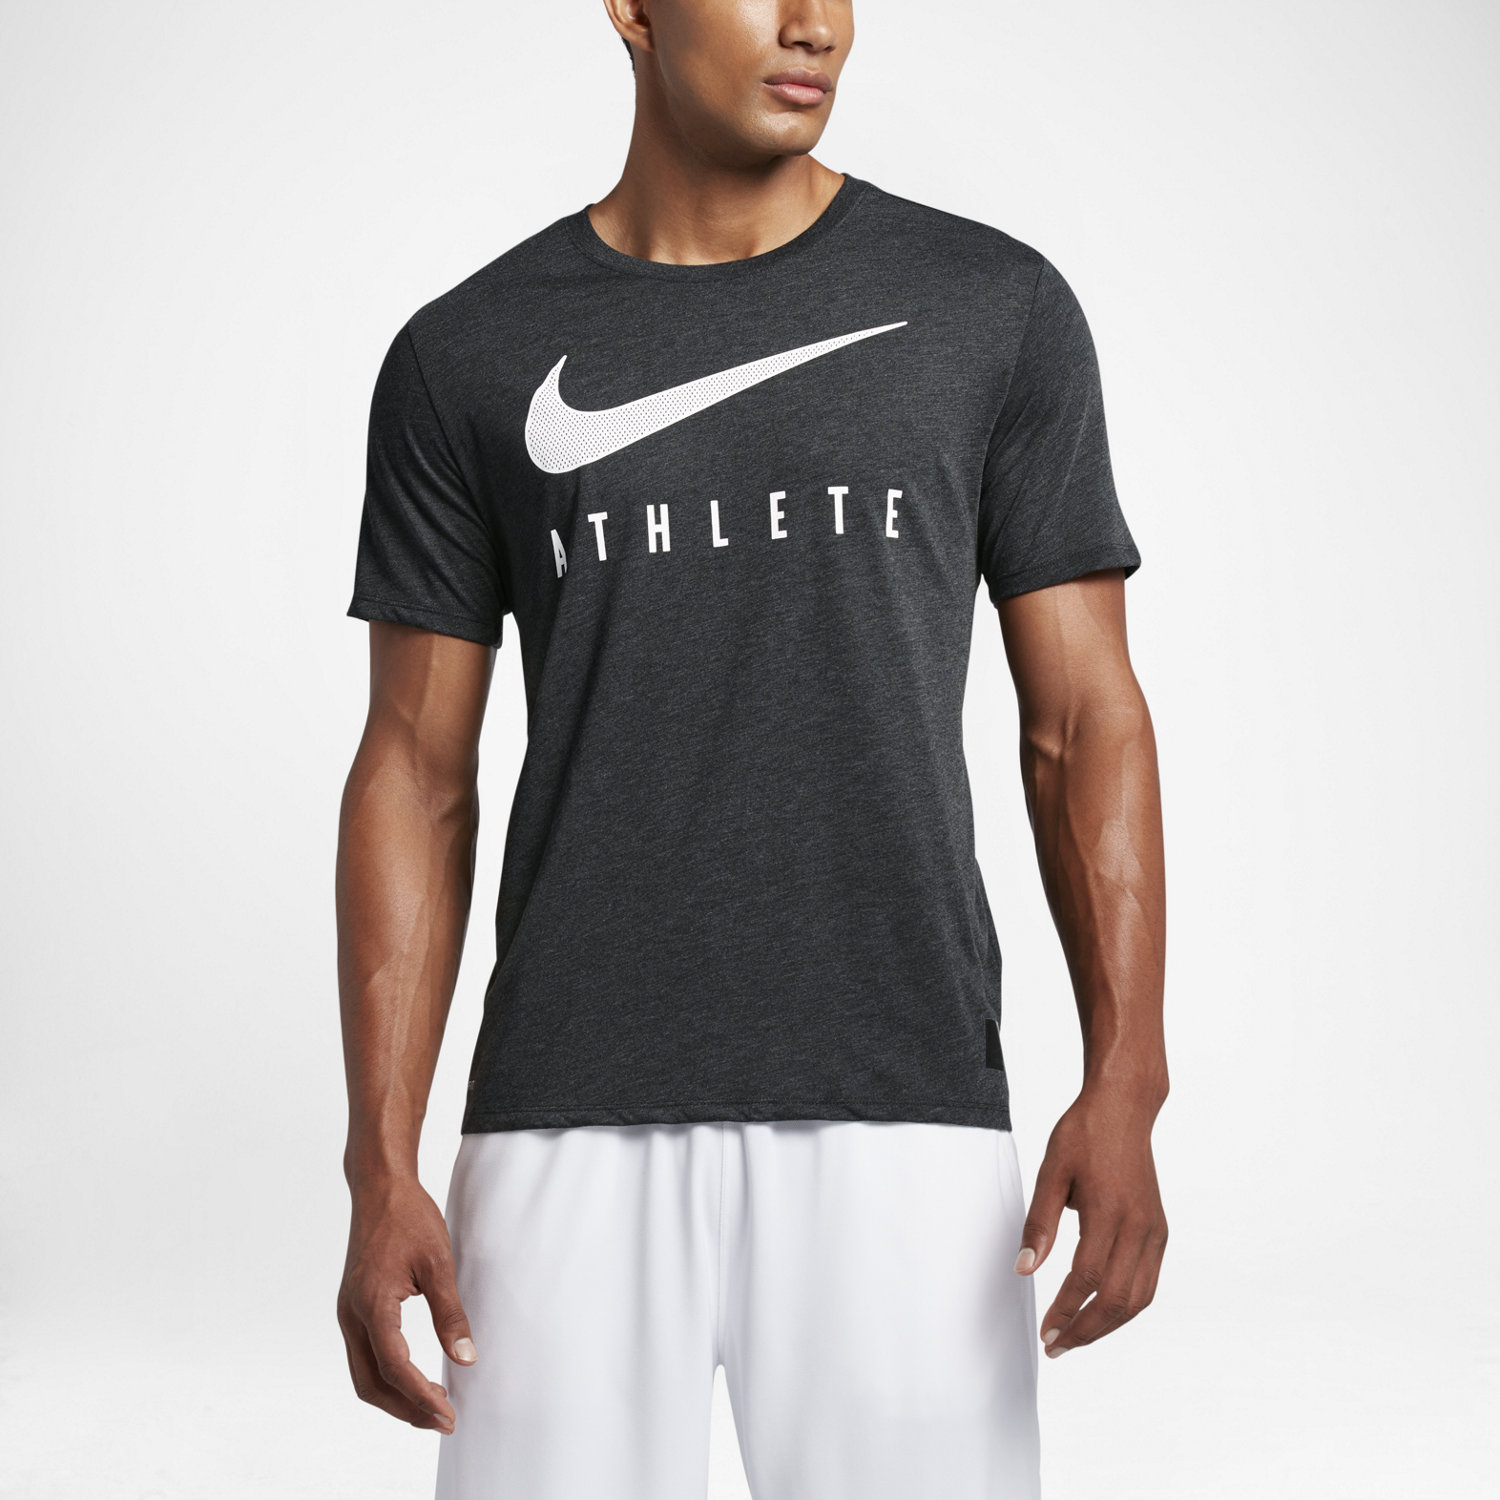 Nike Dry - Men's Graphic Training T-Shirt